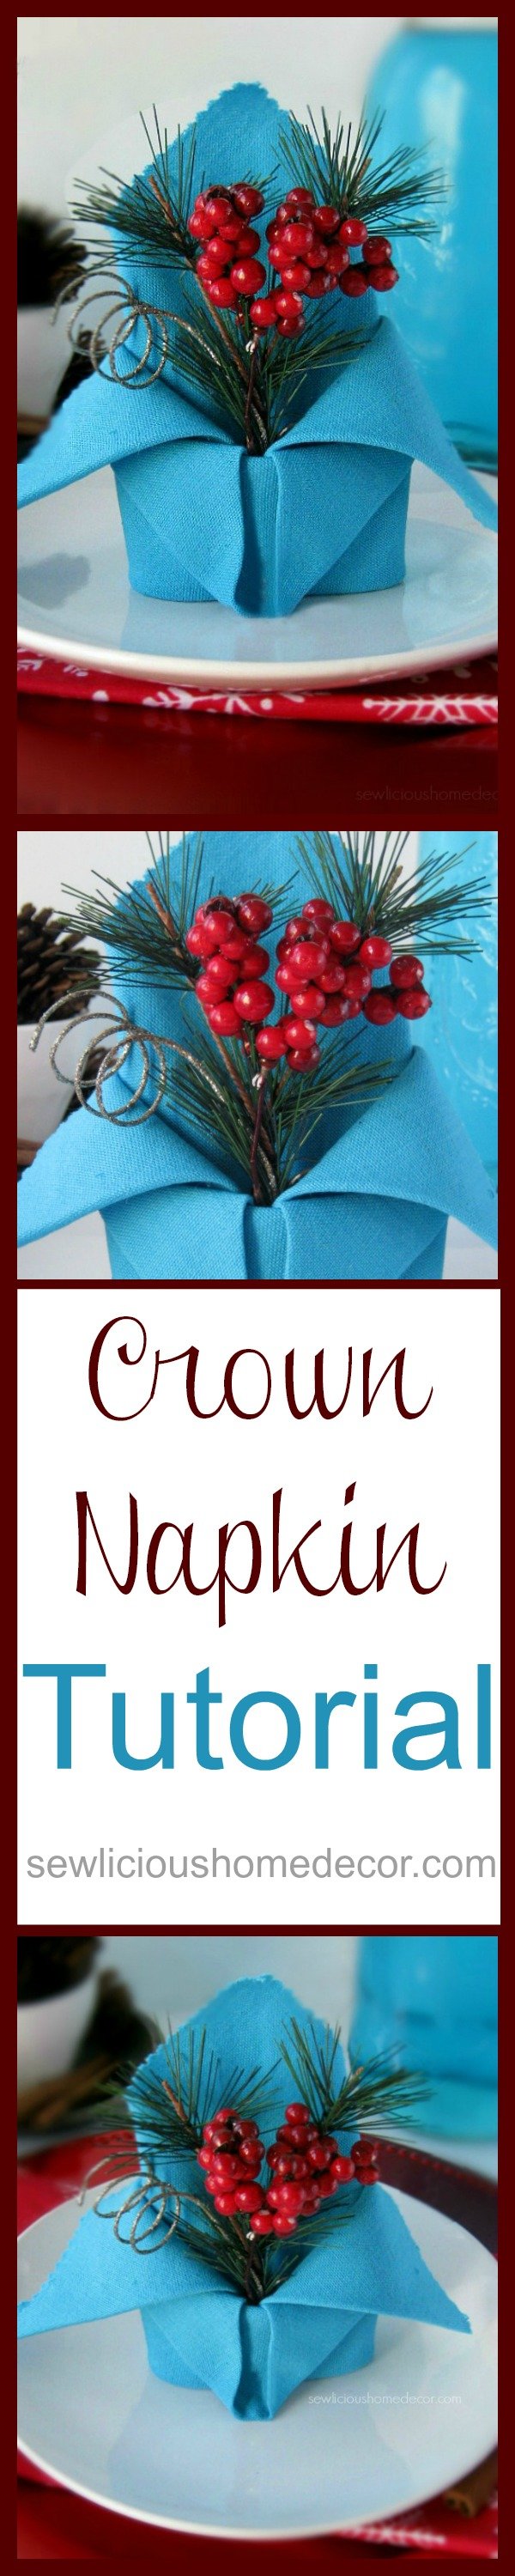 Crown Napkin Tut